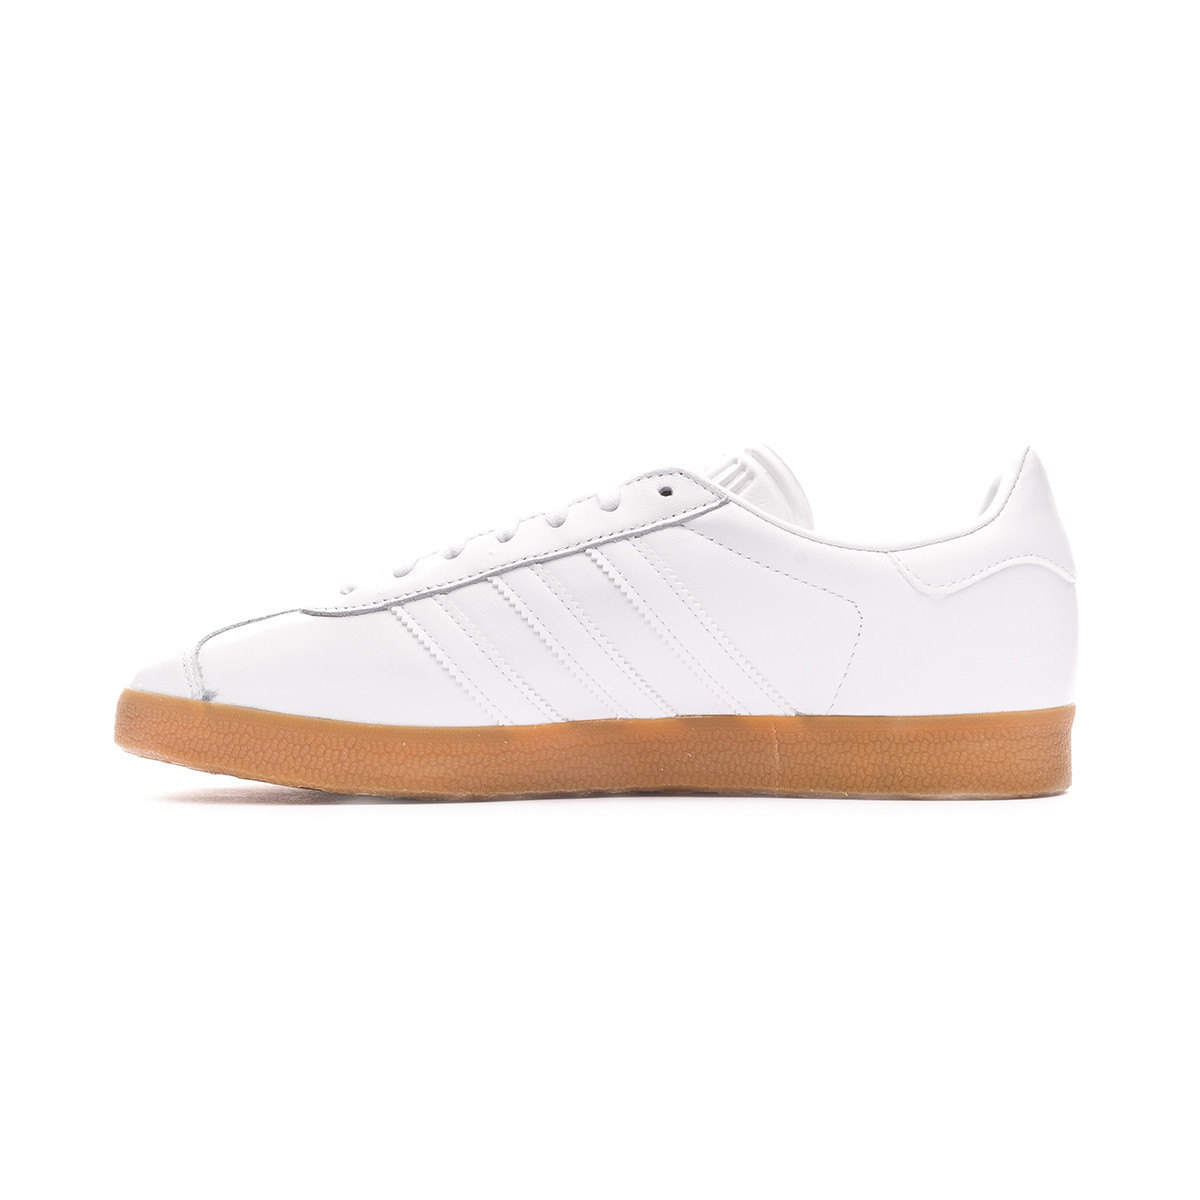 adidas gazelle white and gum